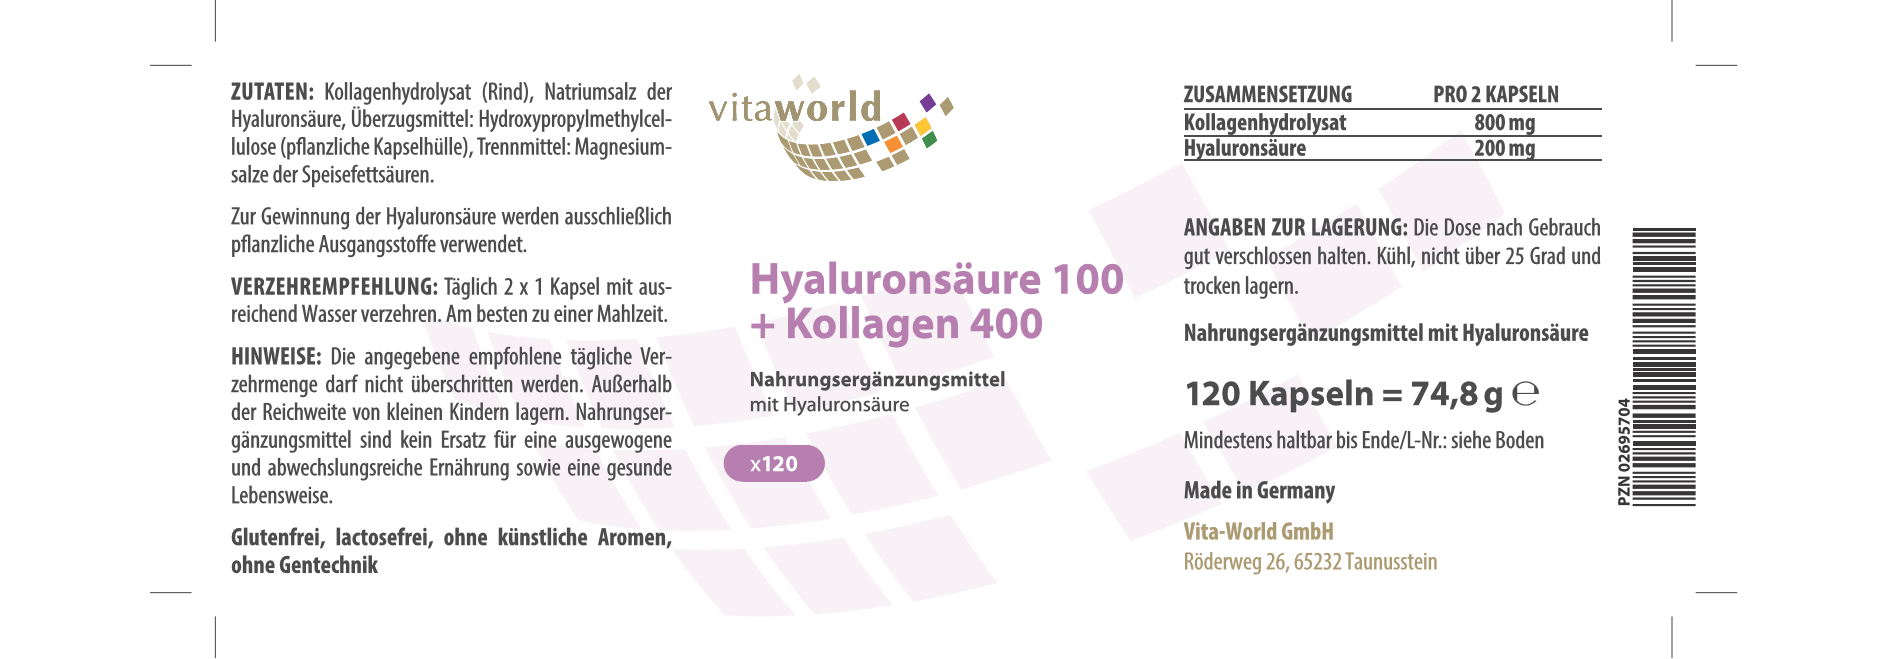 Hyaluronsäure 100 + Kollagen 400 (120 Kps)